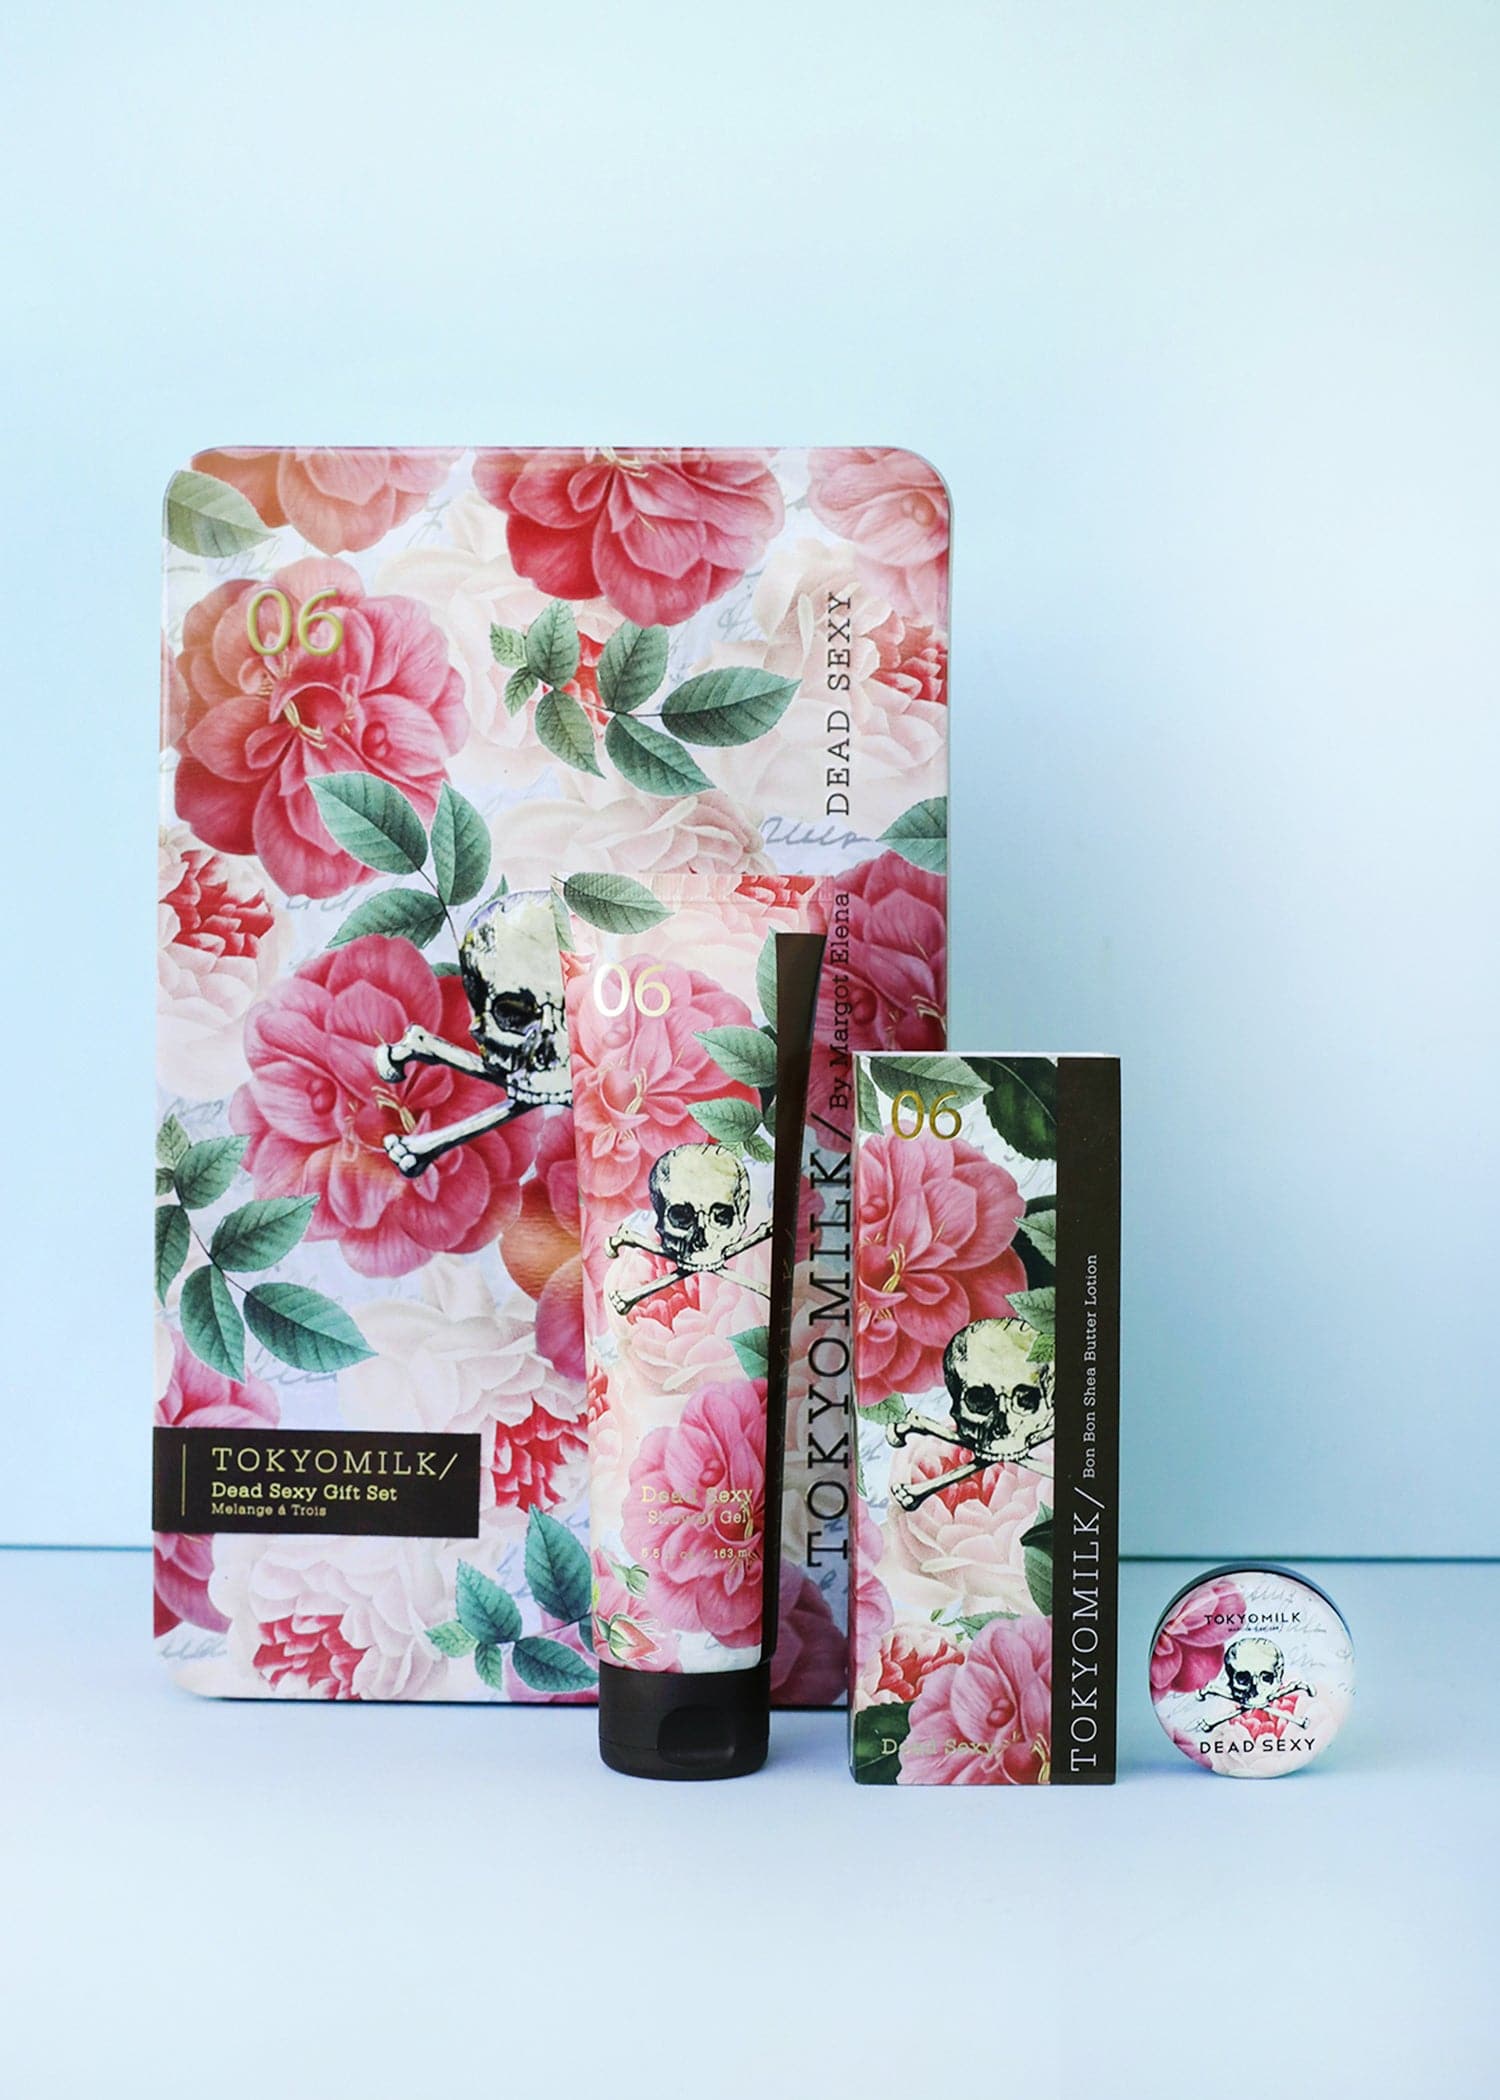 TokyoMilk Luxury Perfume & Hand Cream Gift Sets by Margot Elena